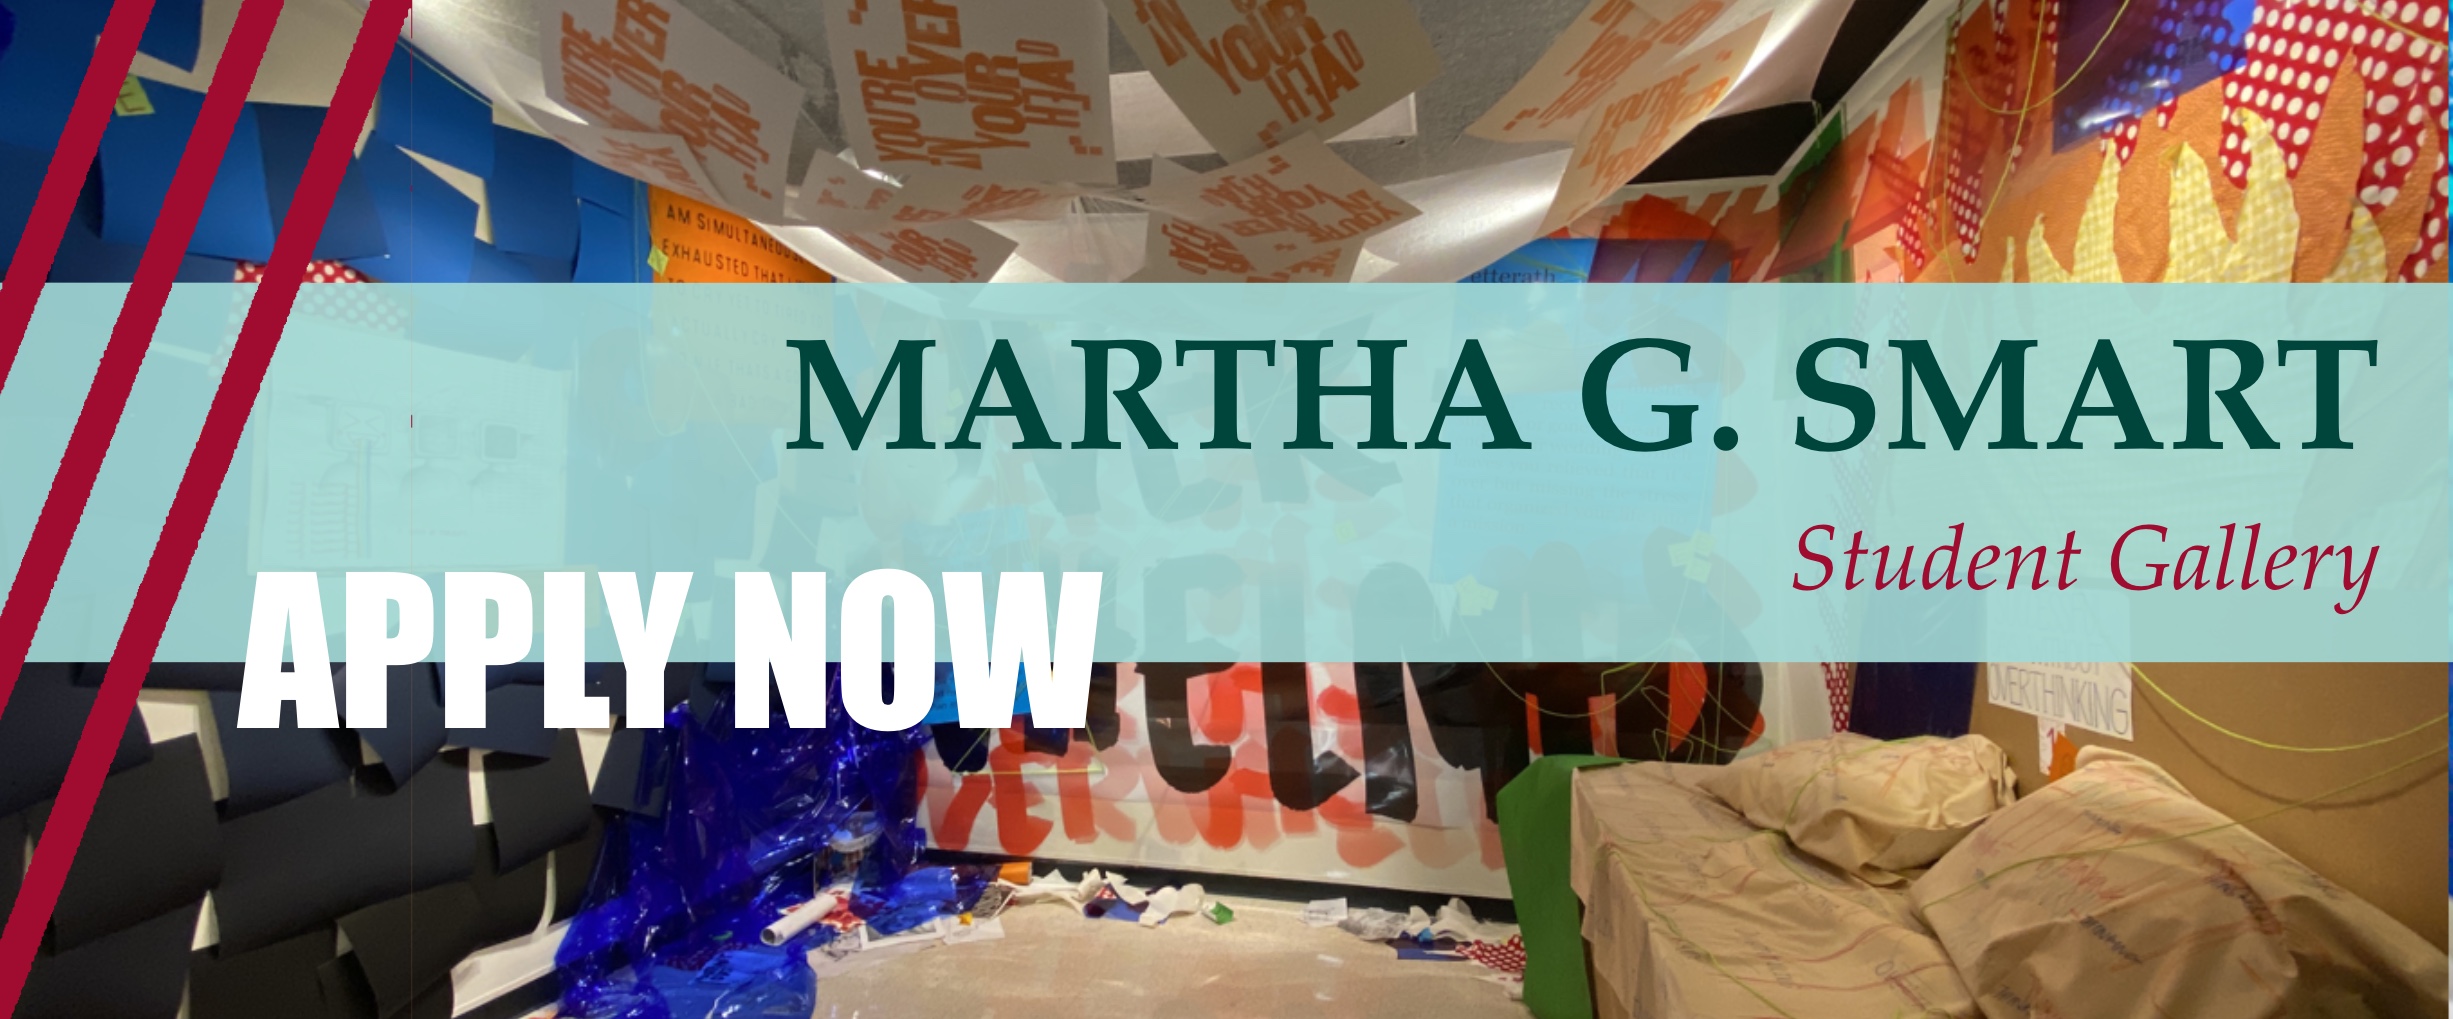 martha-g-smart-banner.jpg